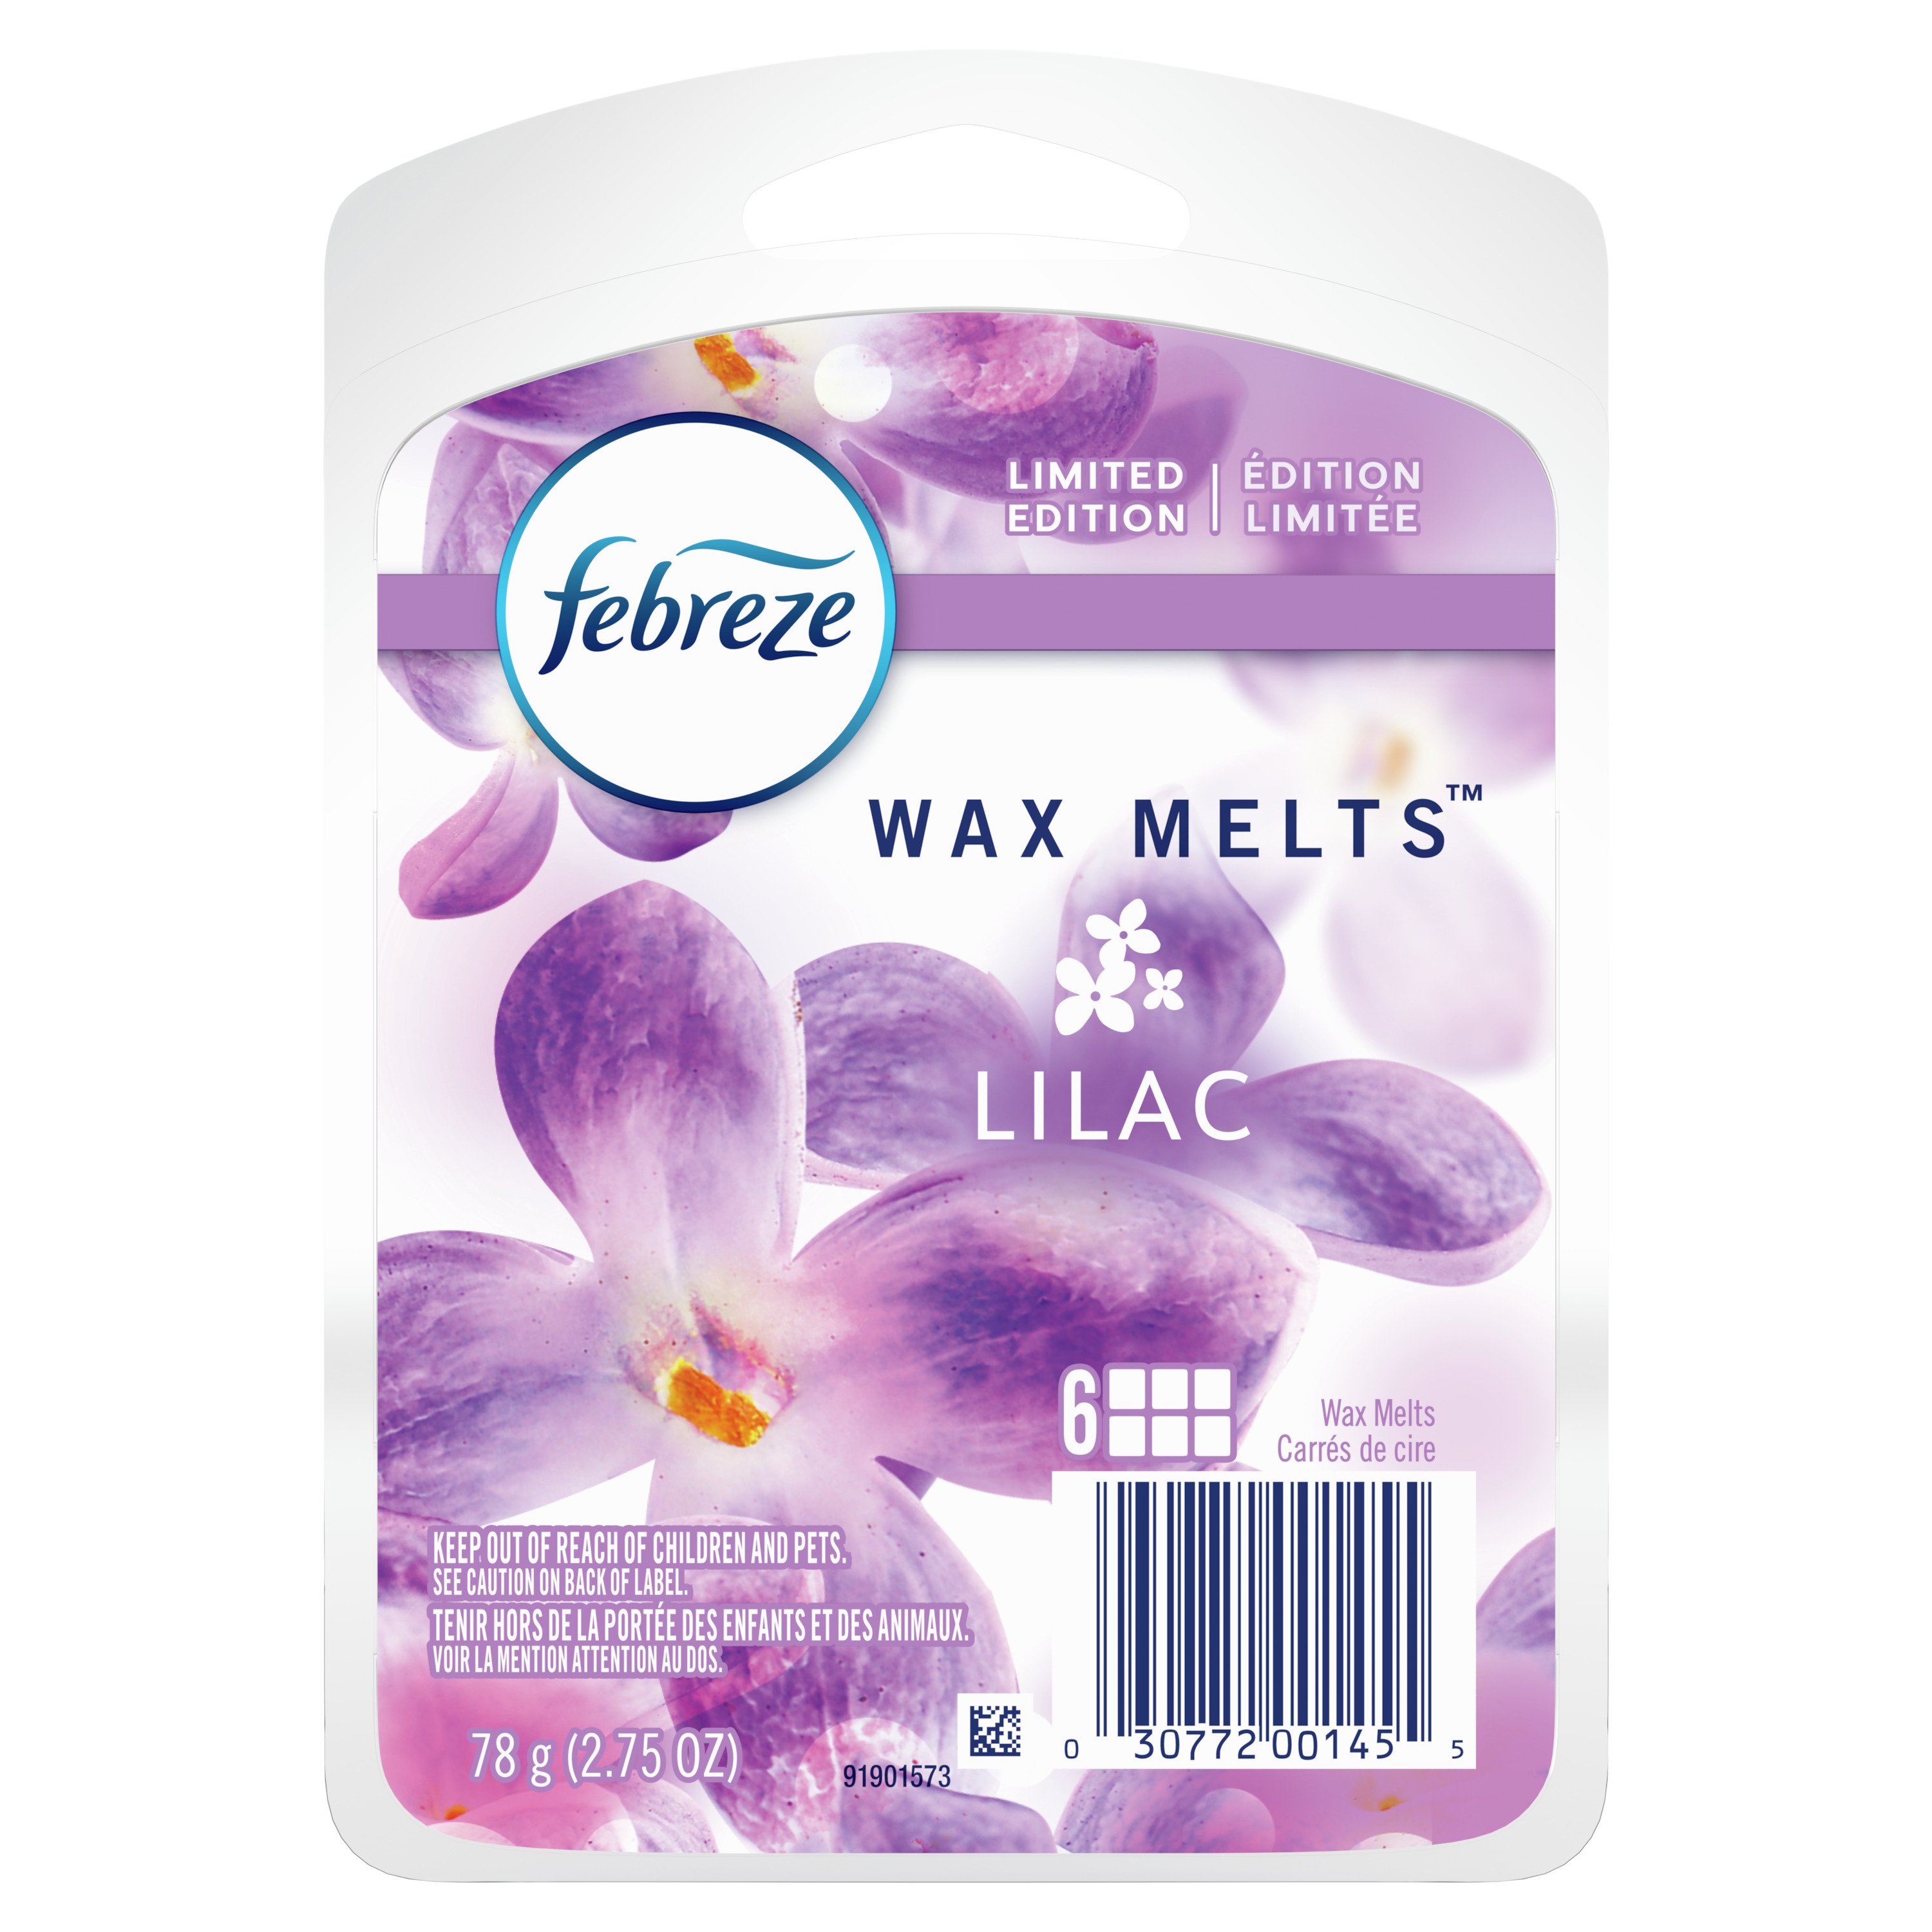 Febreze Wax Melt Warmer - Shop Scented Oils & Wax at H-E-B